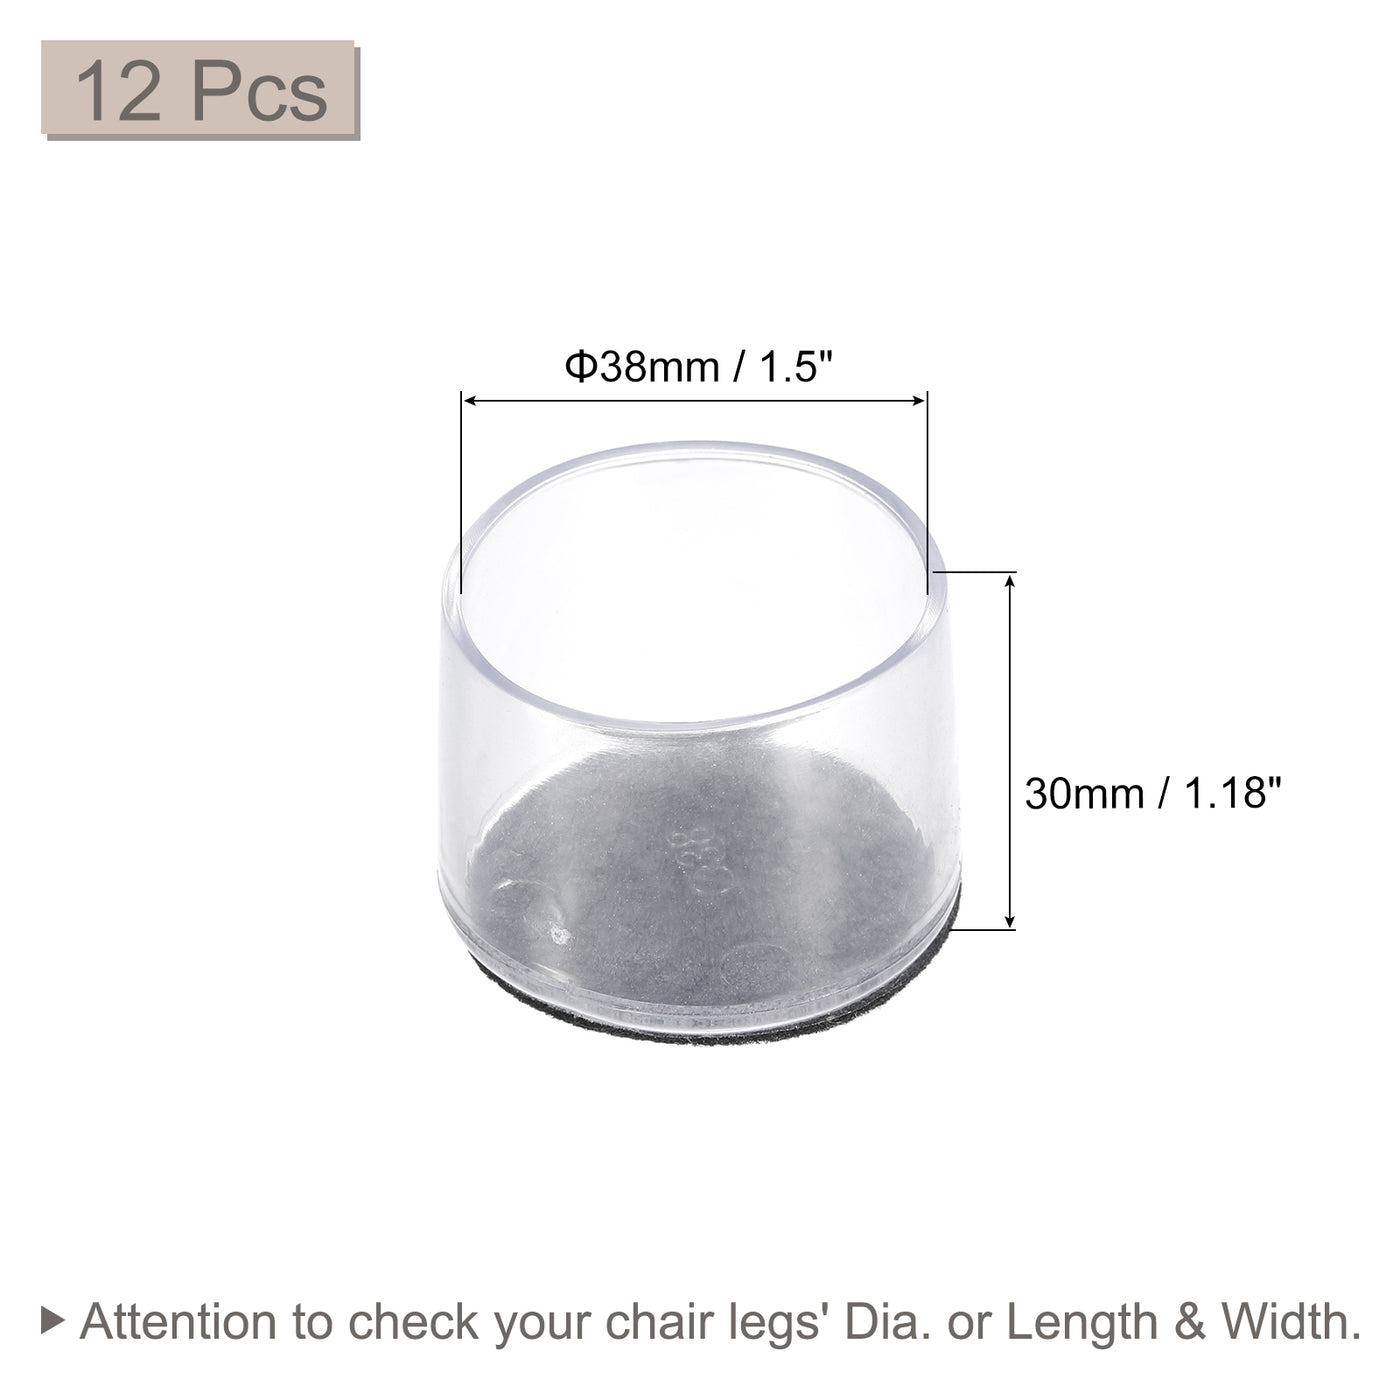 uxcell Uxcell Chair Leg Floor Protectors, 12Pcs 38mm(1.5") PVC & Felt Chair Leg Cover Caps for Hardwood Floors (Clear White)